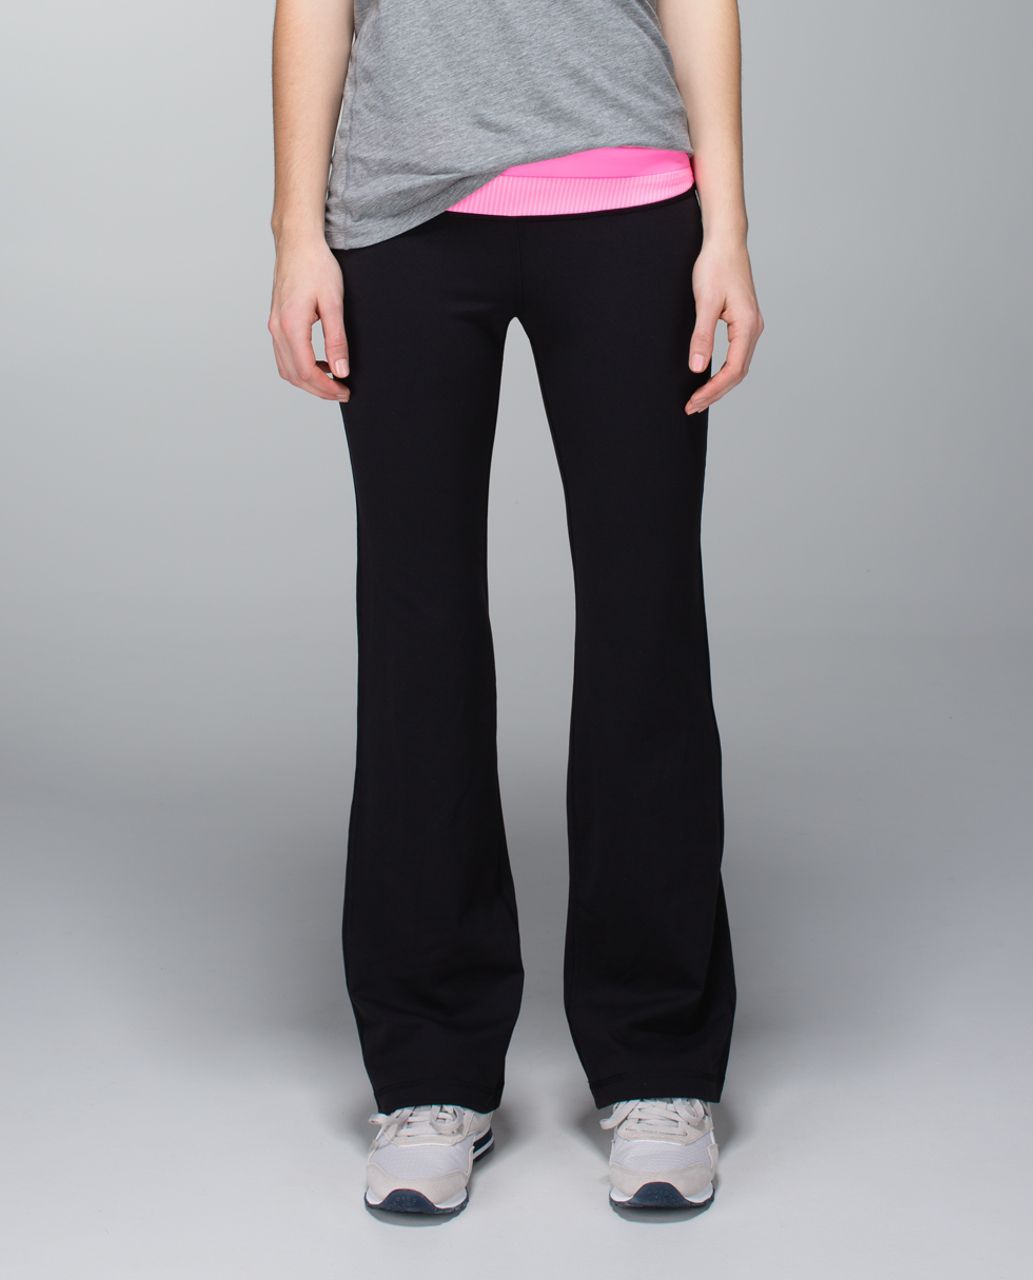 Lululemon Astro Pant (Regular) *Full-On Luon - Black / Apex Stripe Zing Pink Light / Mini Hyper Stripe Zing Pink Light